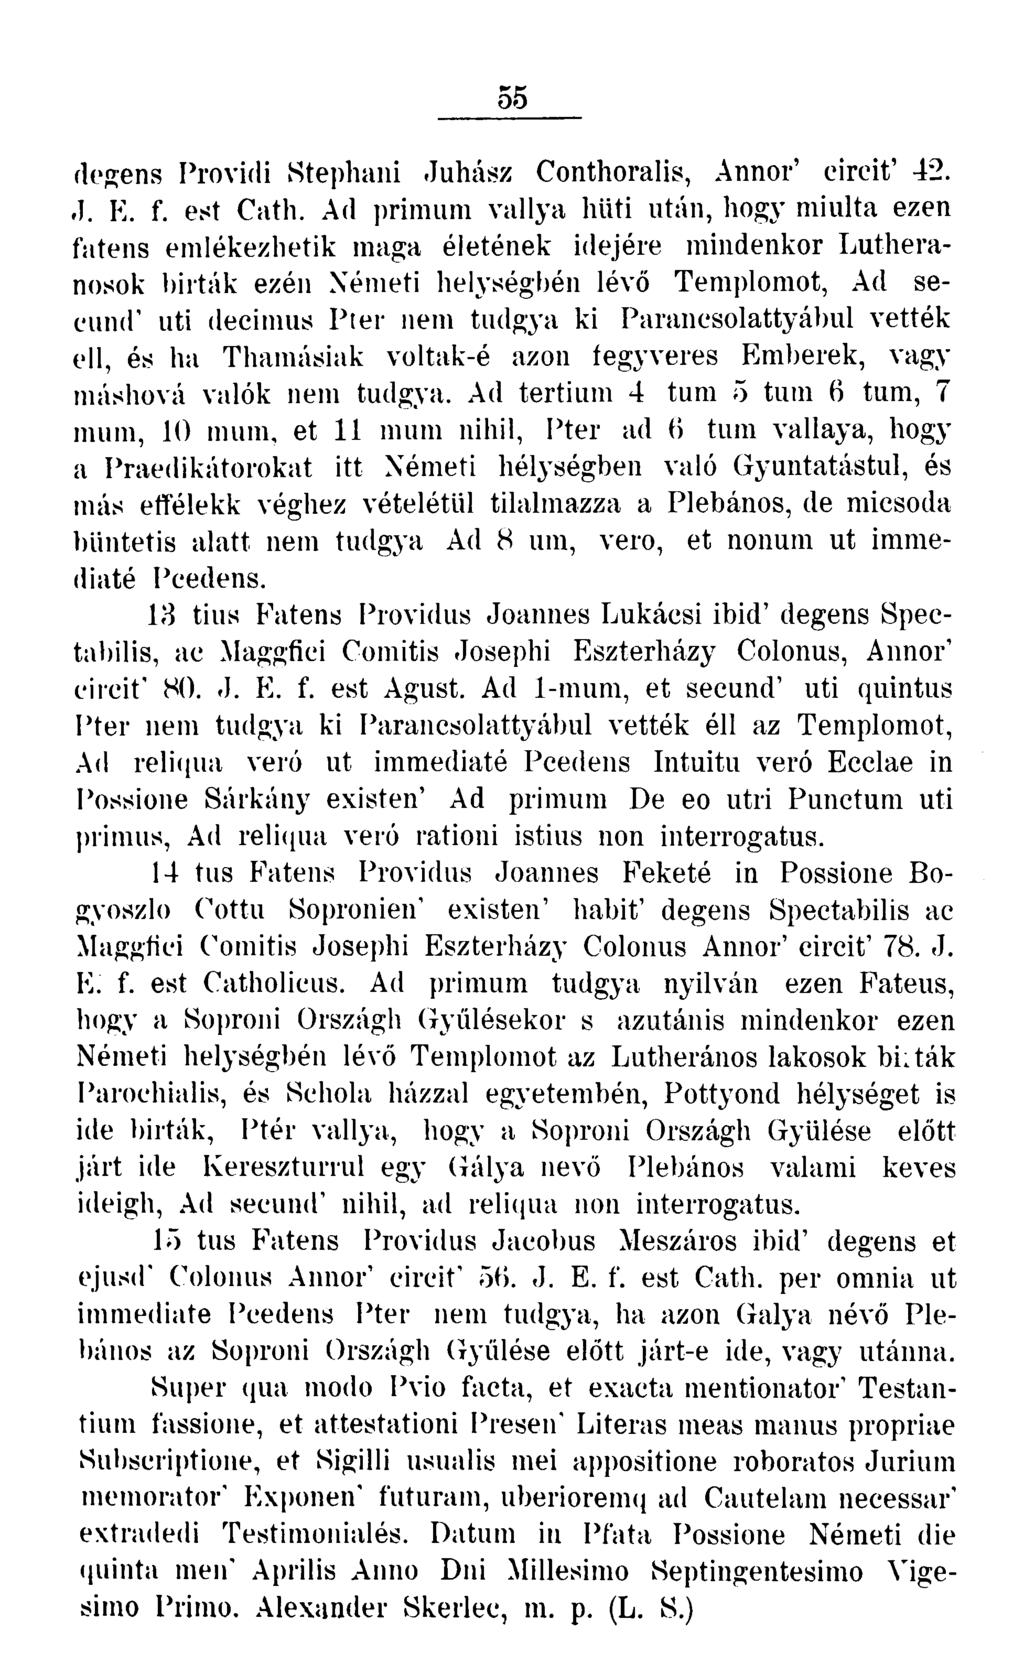 55 degens Providi Stephani Juhász Conthoralis, Annor' circit' 42. J. E. f. est Cath.